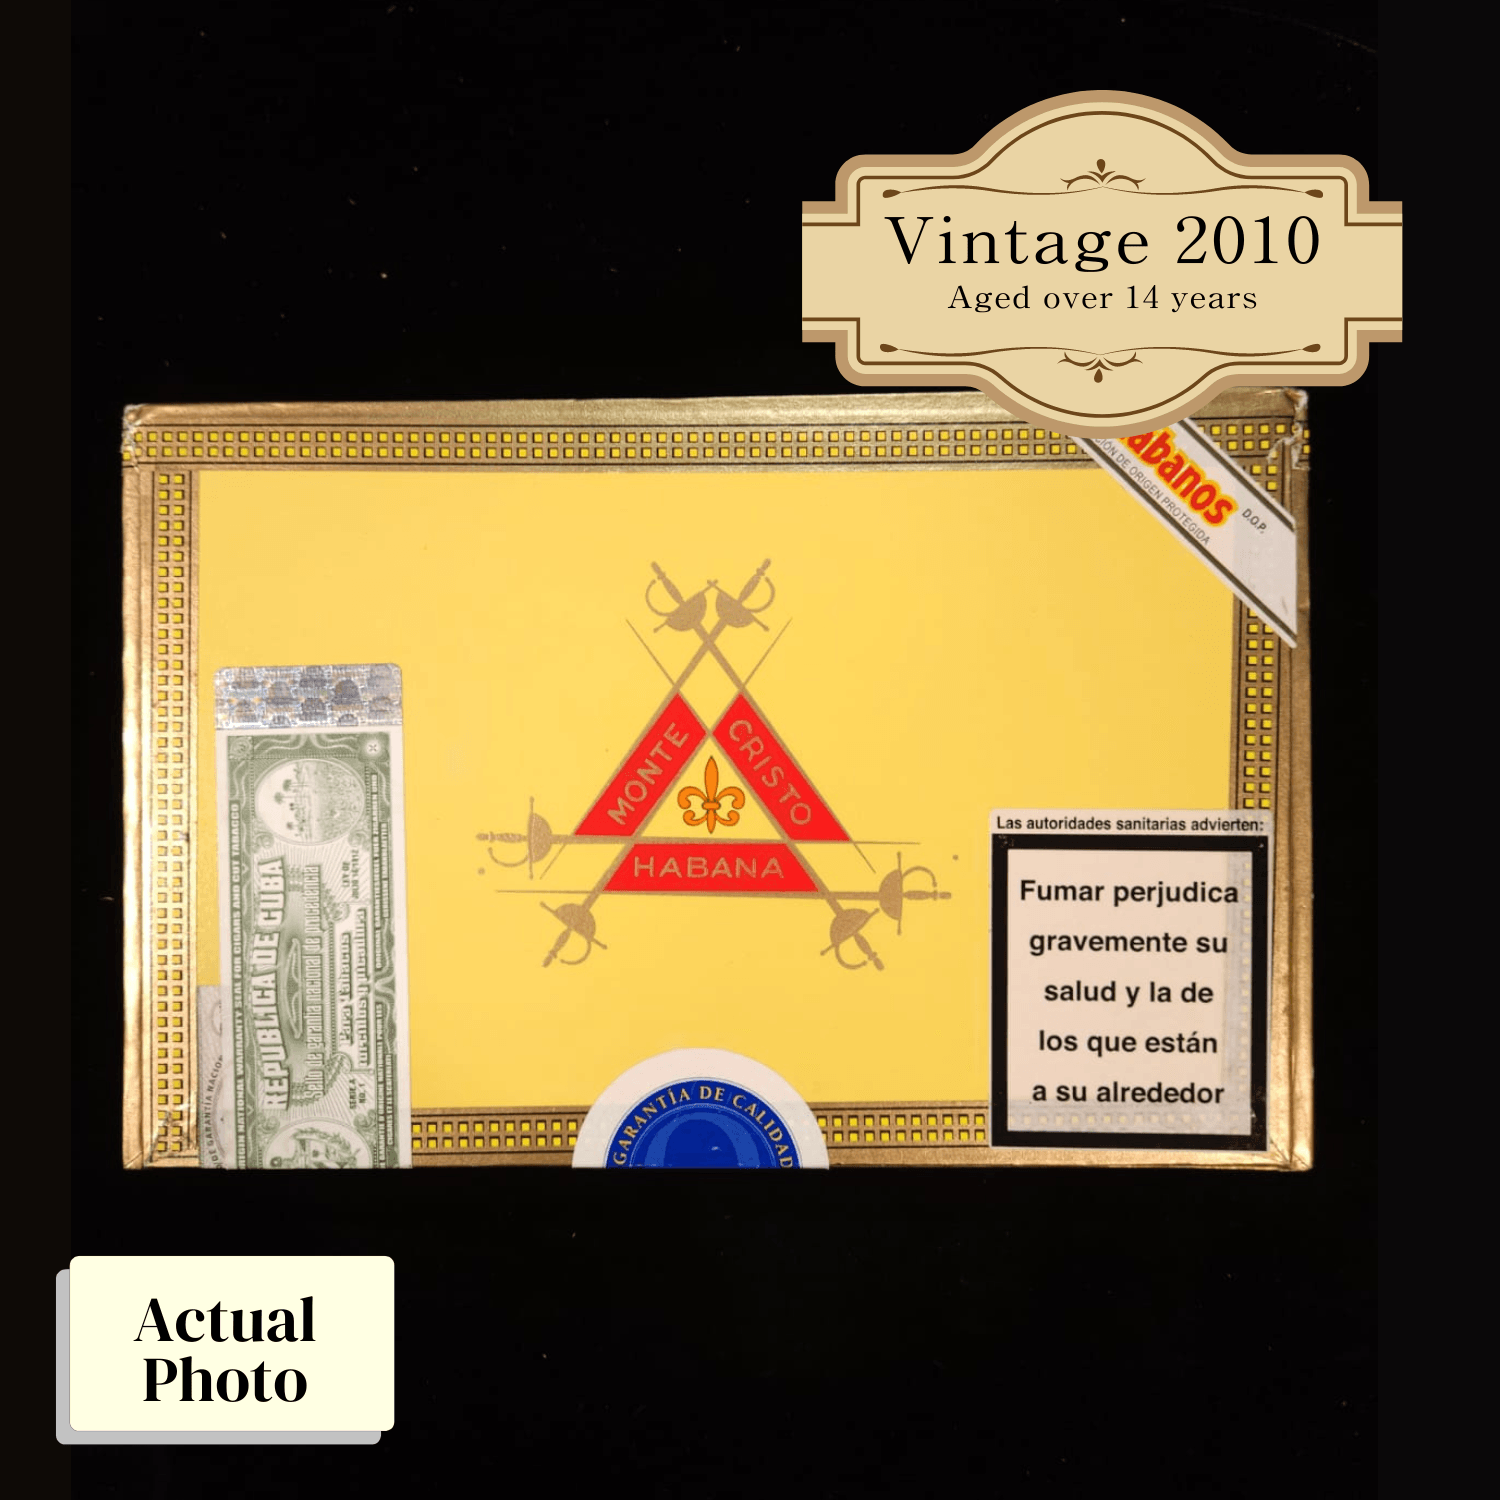 Vintage 2010 | Montecristo No.4 | Box 25 (Box Code: SA0 JUL 10) - hk.cohcigars